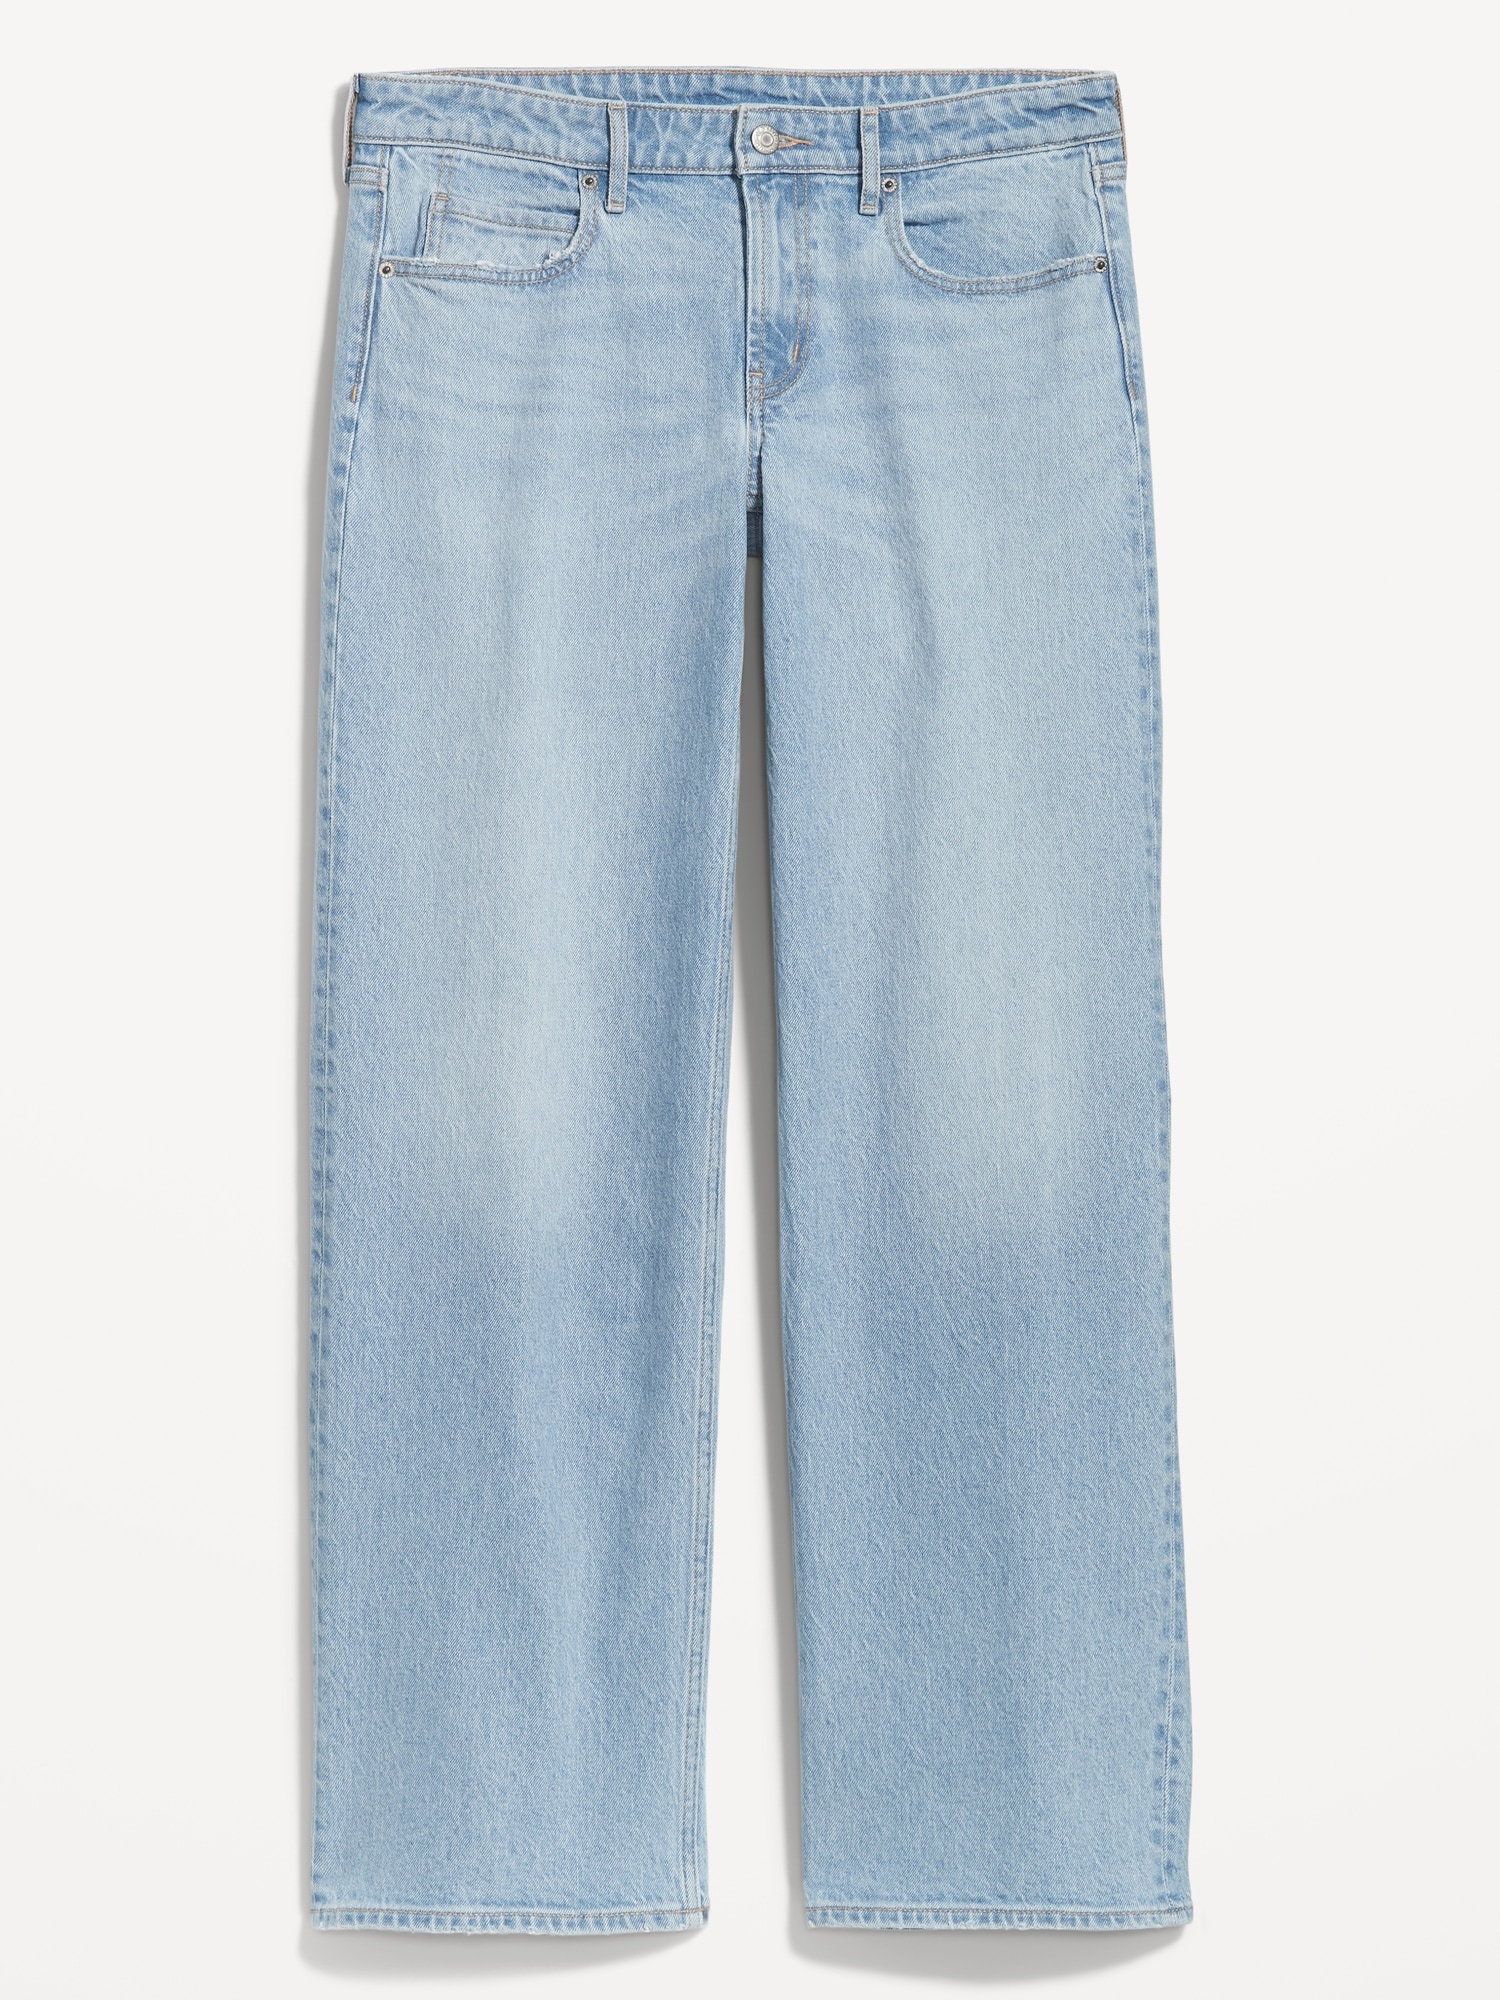 GREAIDEA Mid Rise Barrel Jeans for Women Wide Leg Mid Waist